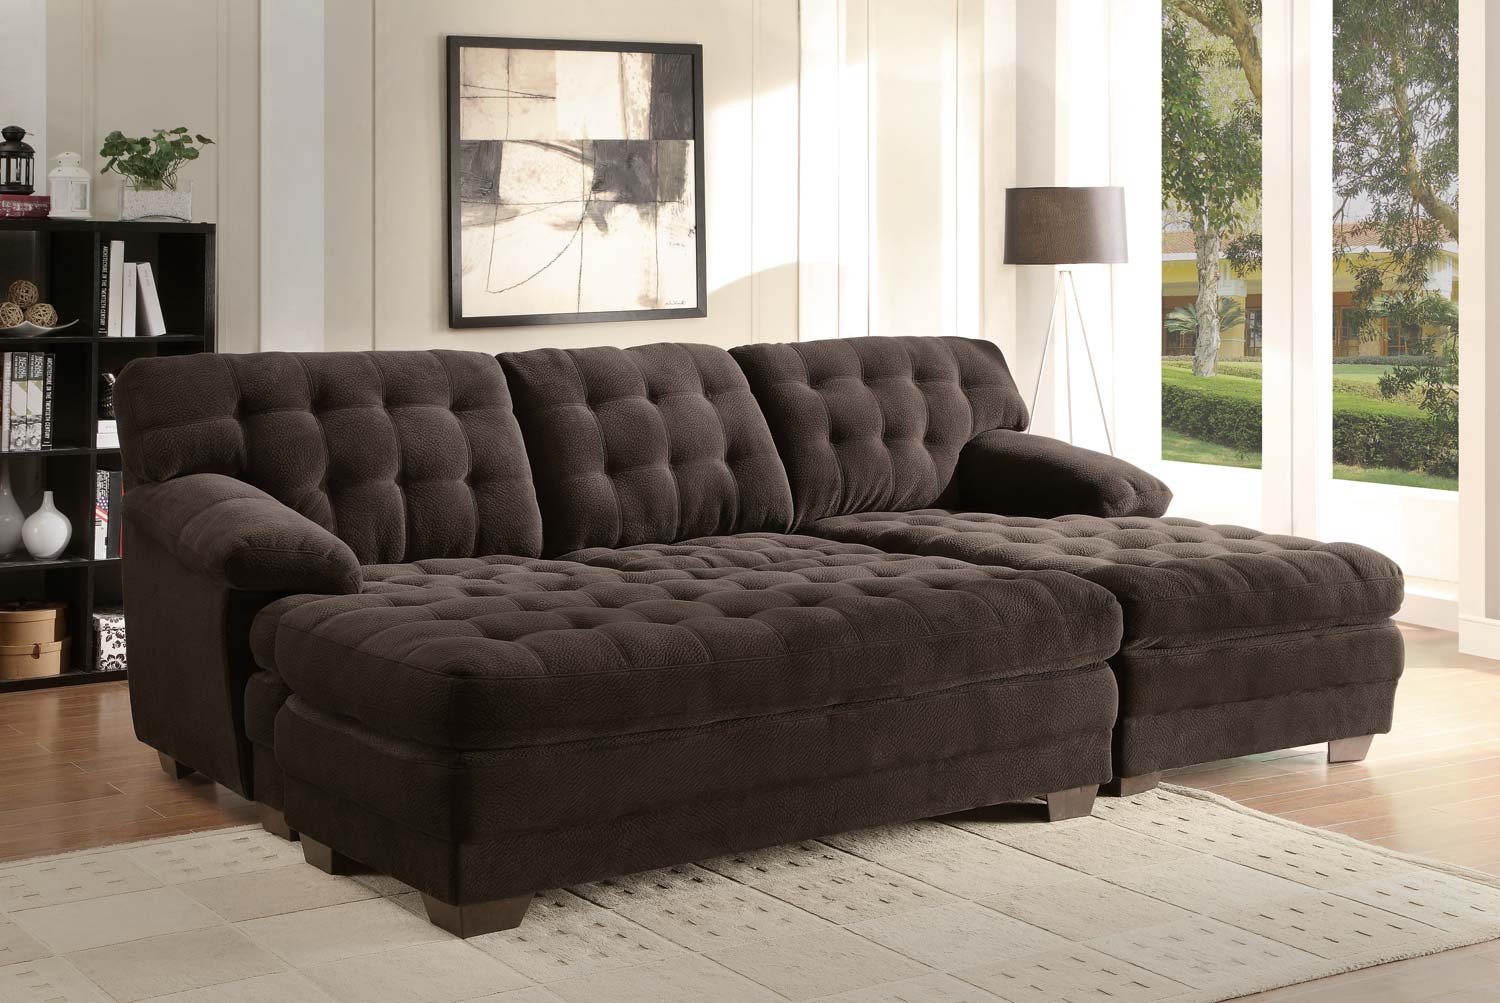 Homelegance Brooks Sectional Sofa Set - Chocolate - Champion Microfiber